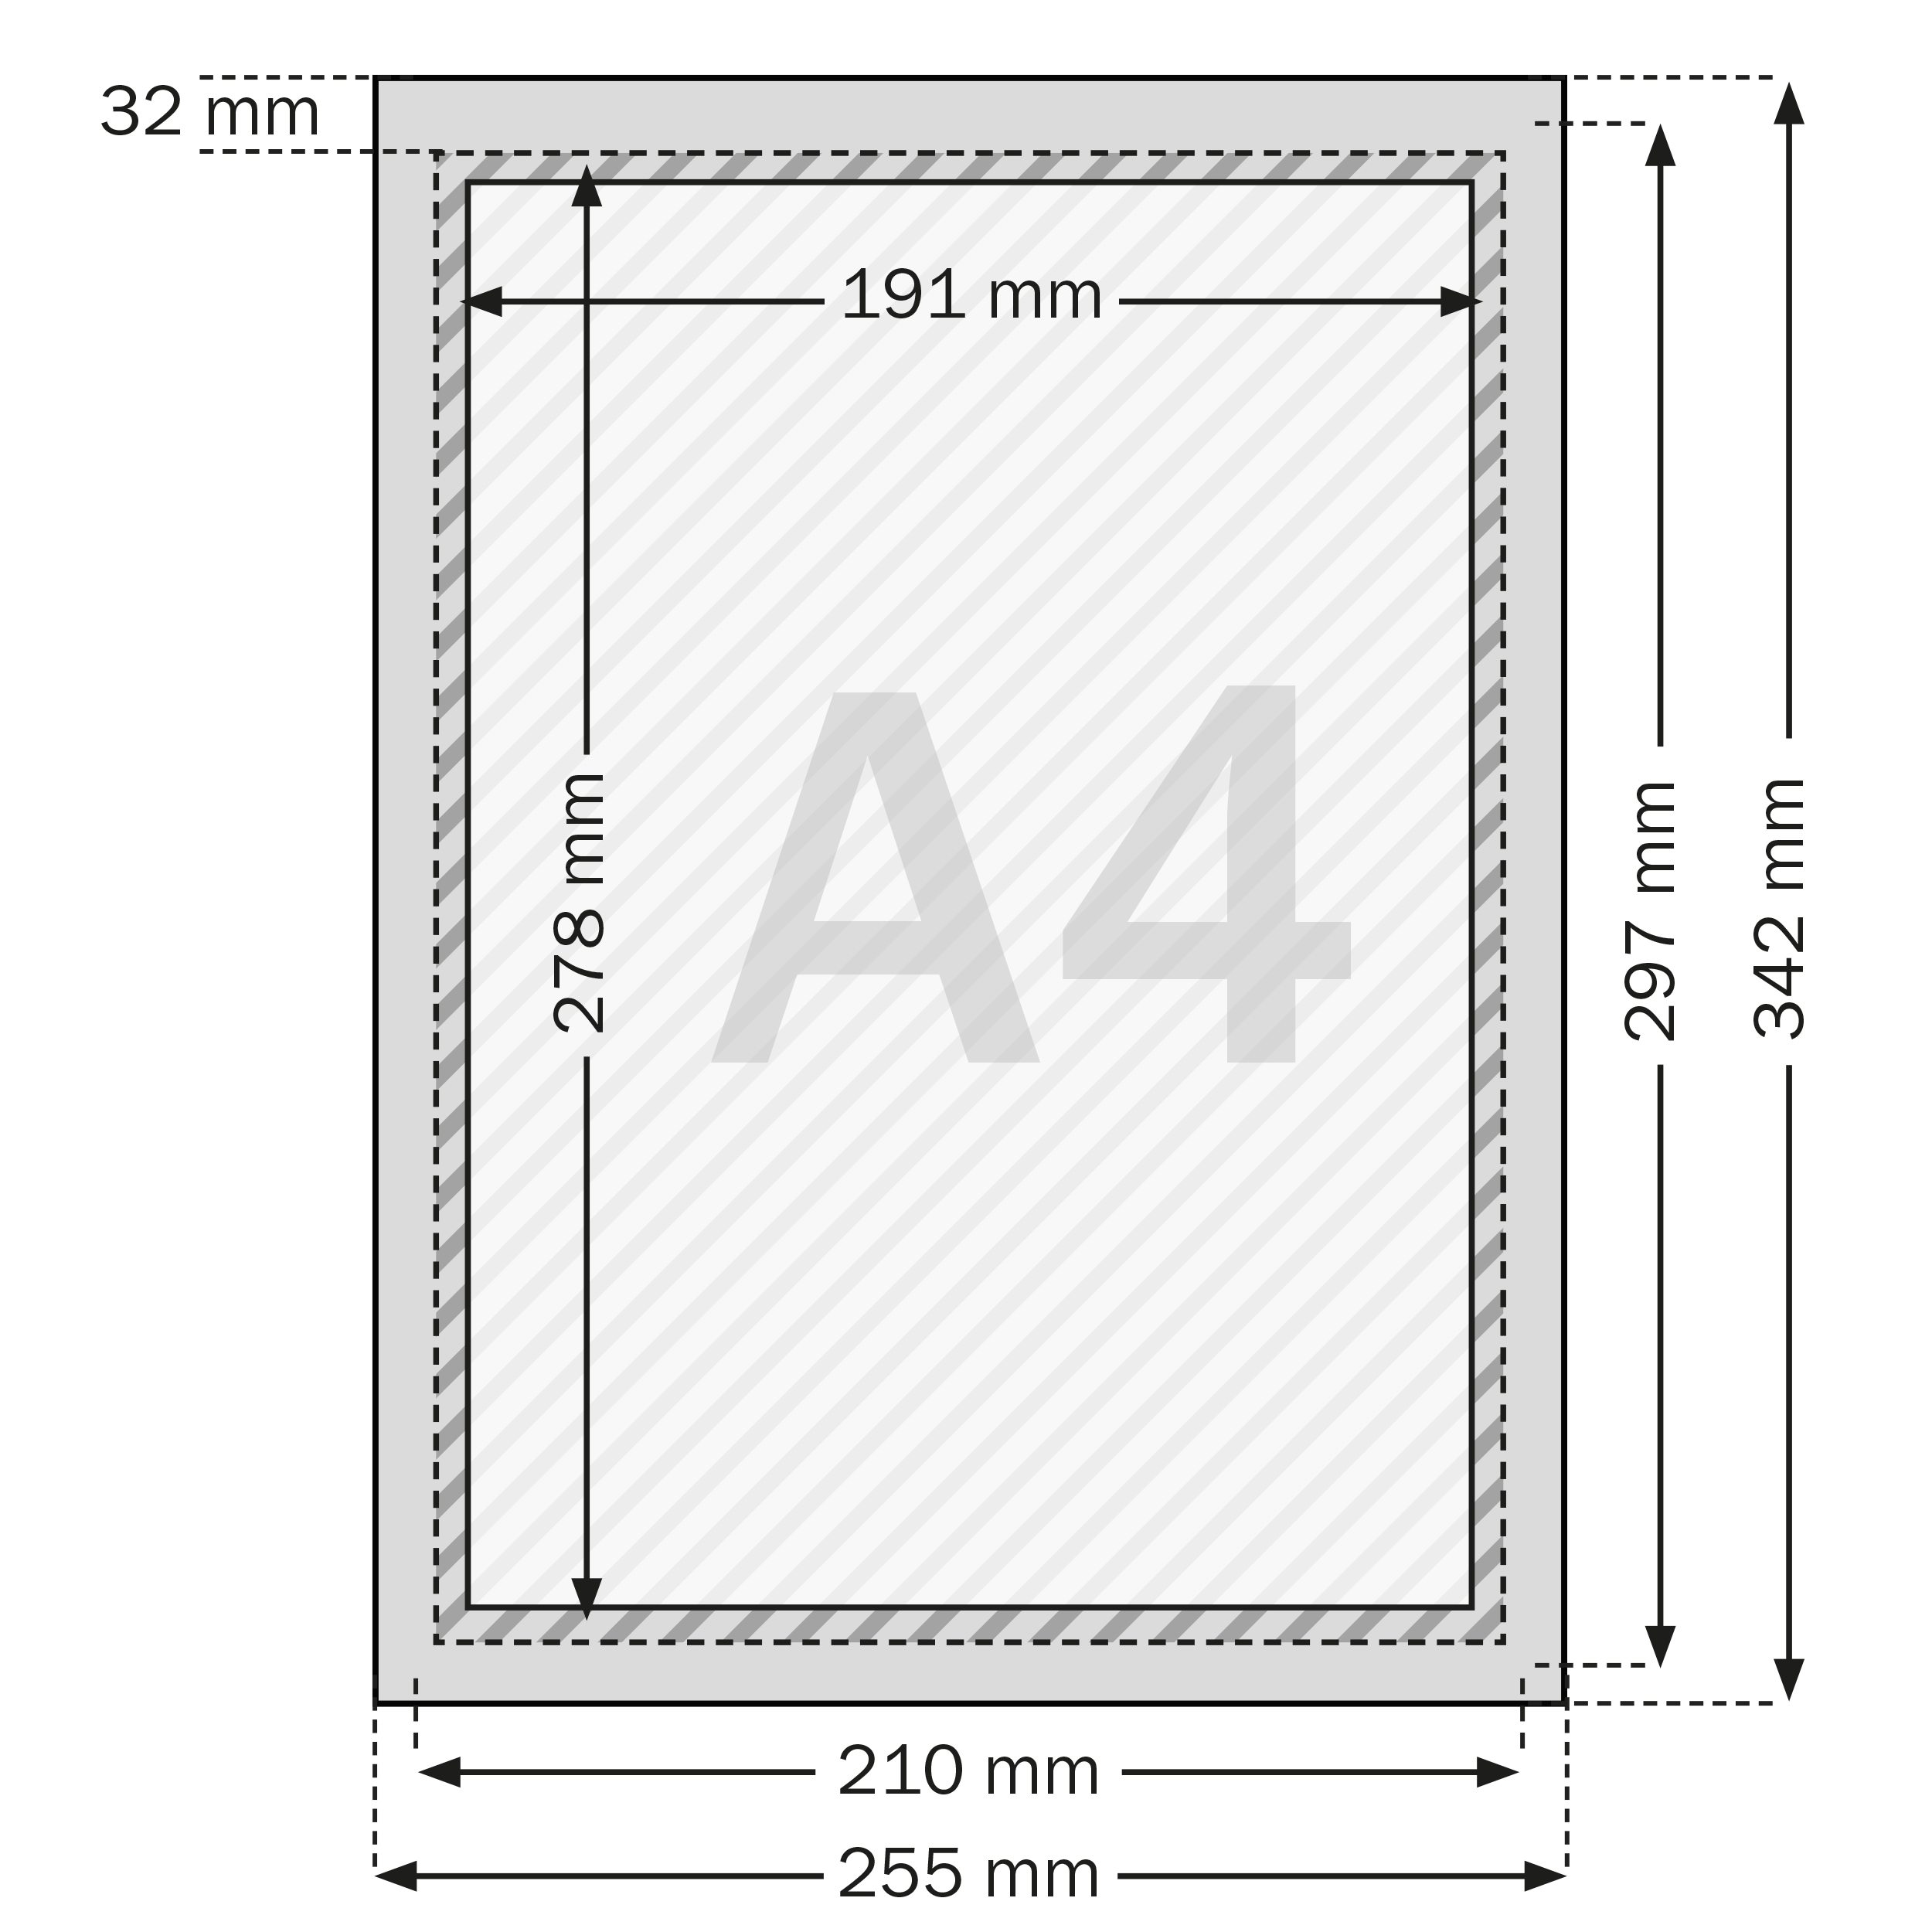 Cadre Aluminium clic clac argenté format A4 - 21 x 29,7 cm - supplytechmaroc